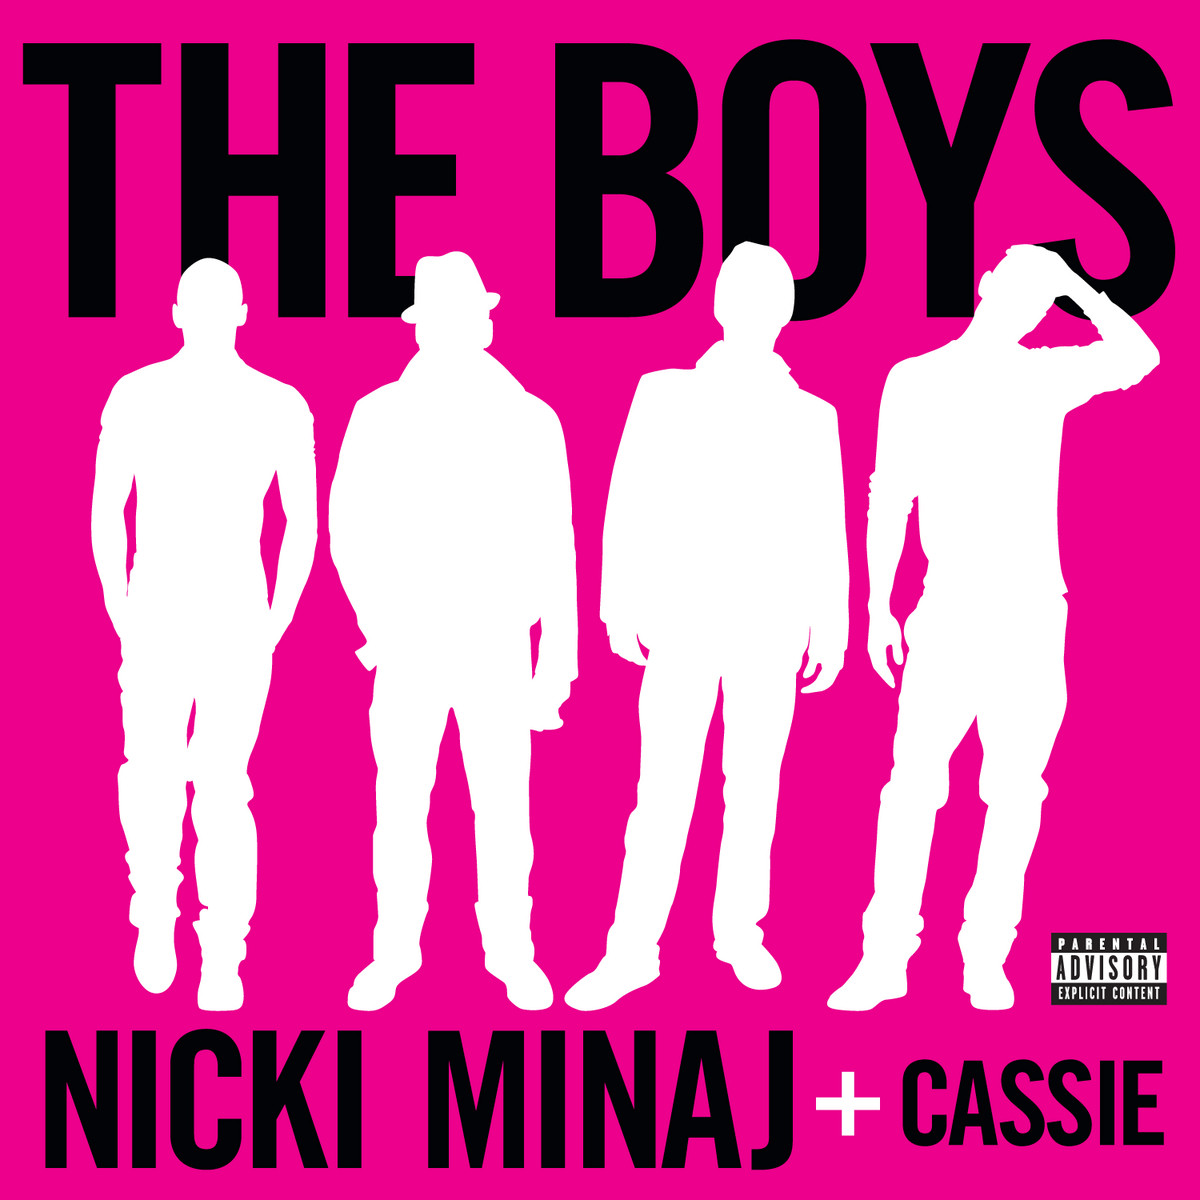 http://1.bp.blogspot.com/-FmtYeK46Jj4/UFJAhwwYctI/AAAAAAAAEVs/PQamfvTwR9s/s1600/Nicki-Minaj-The-Boys-Official-2012.png